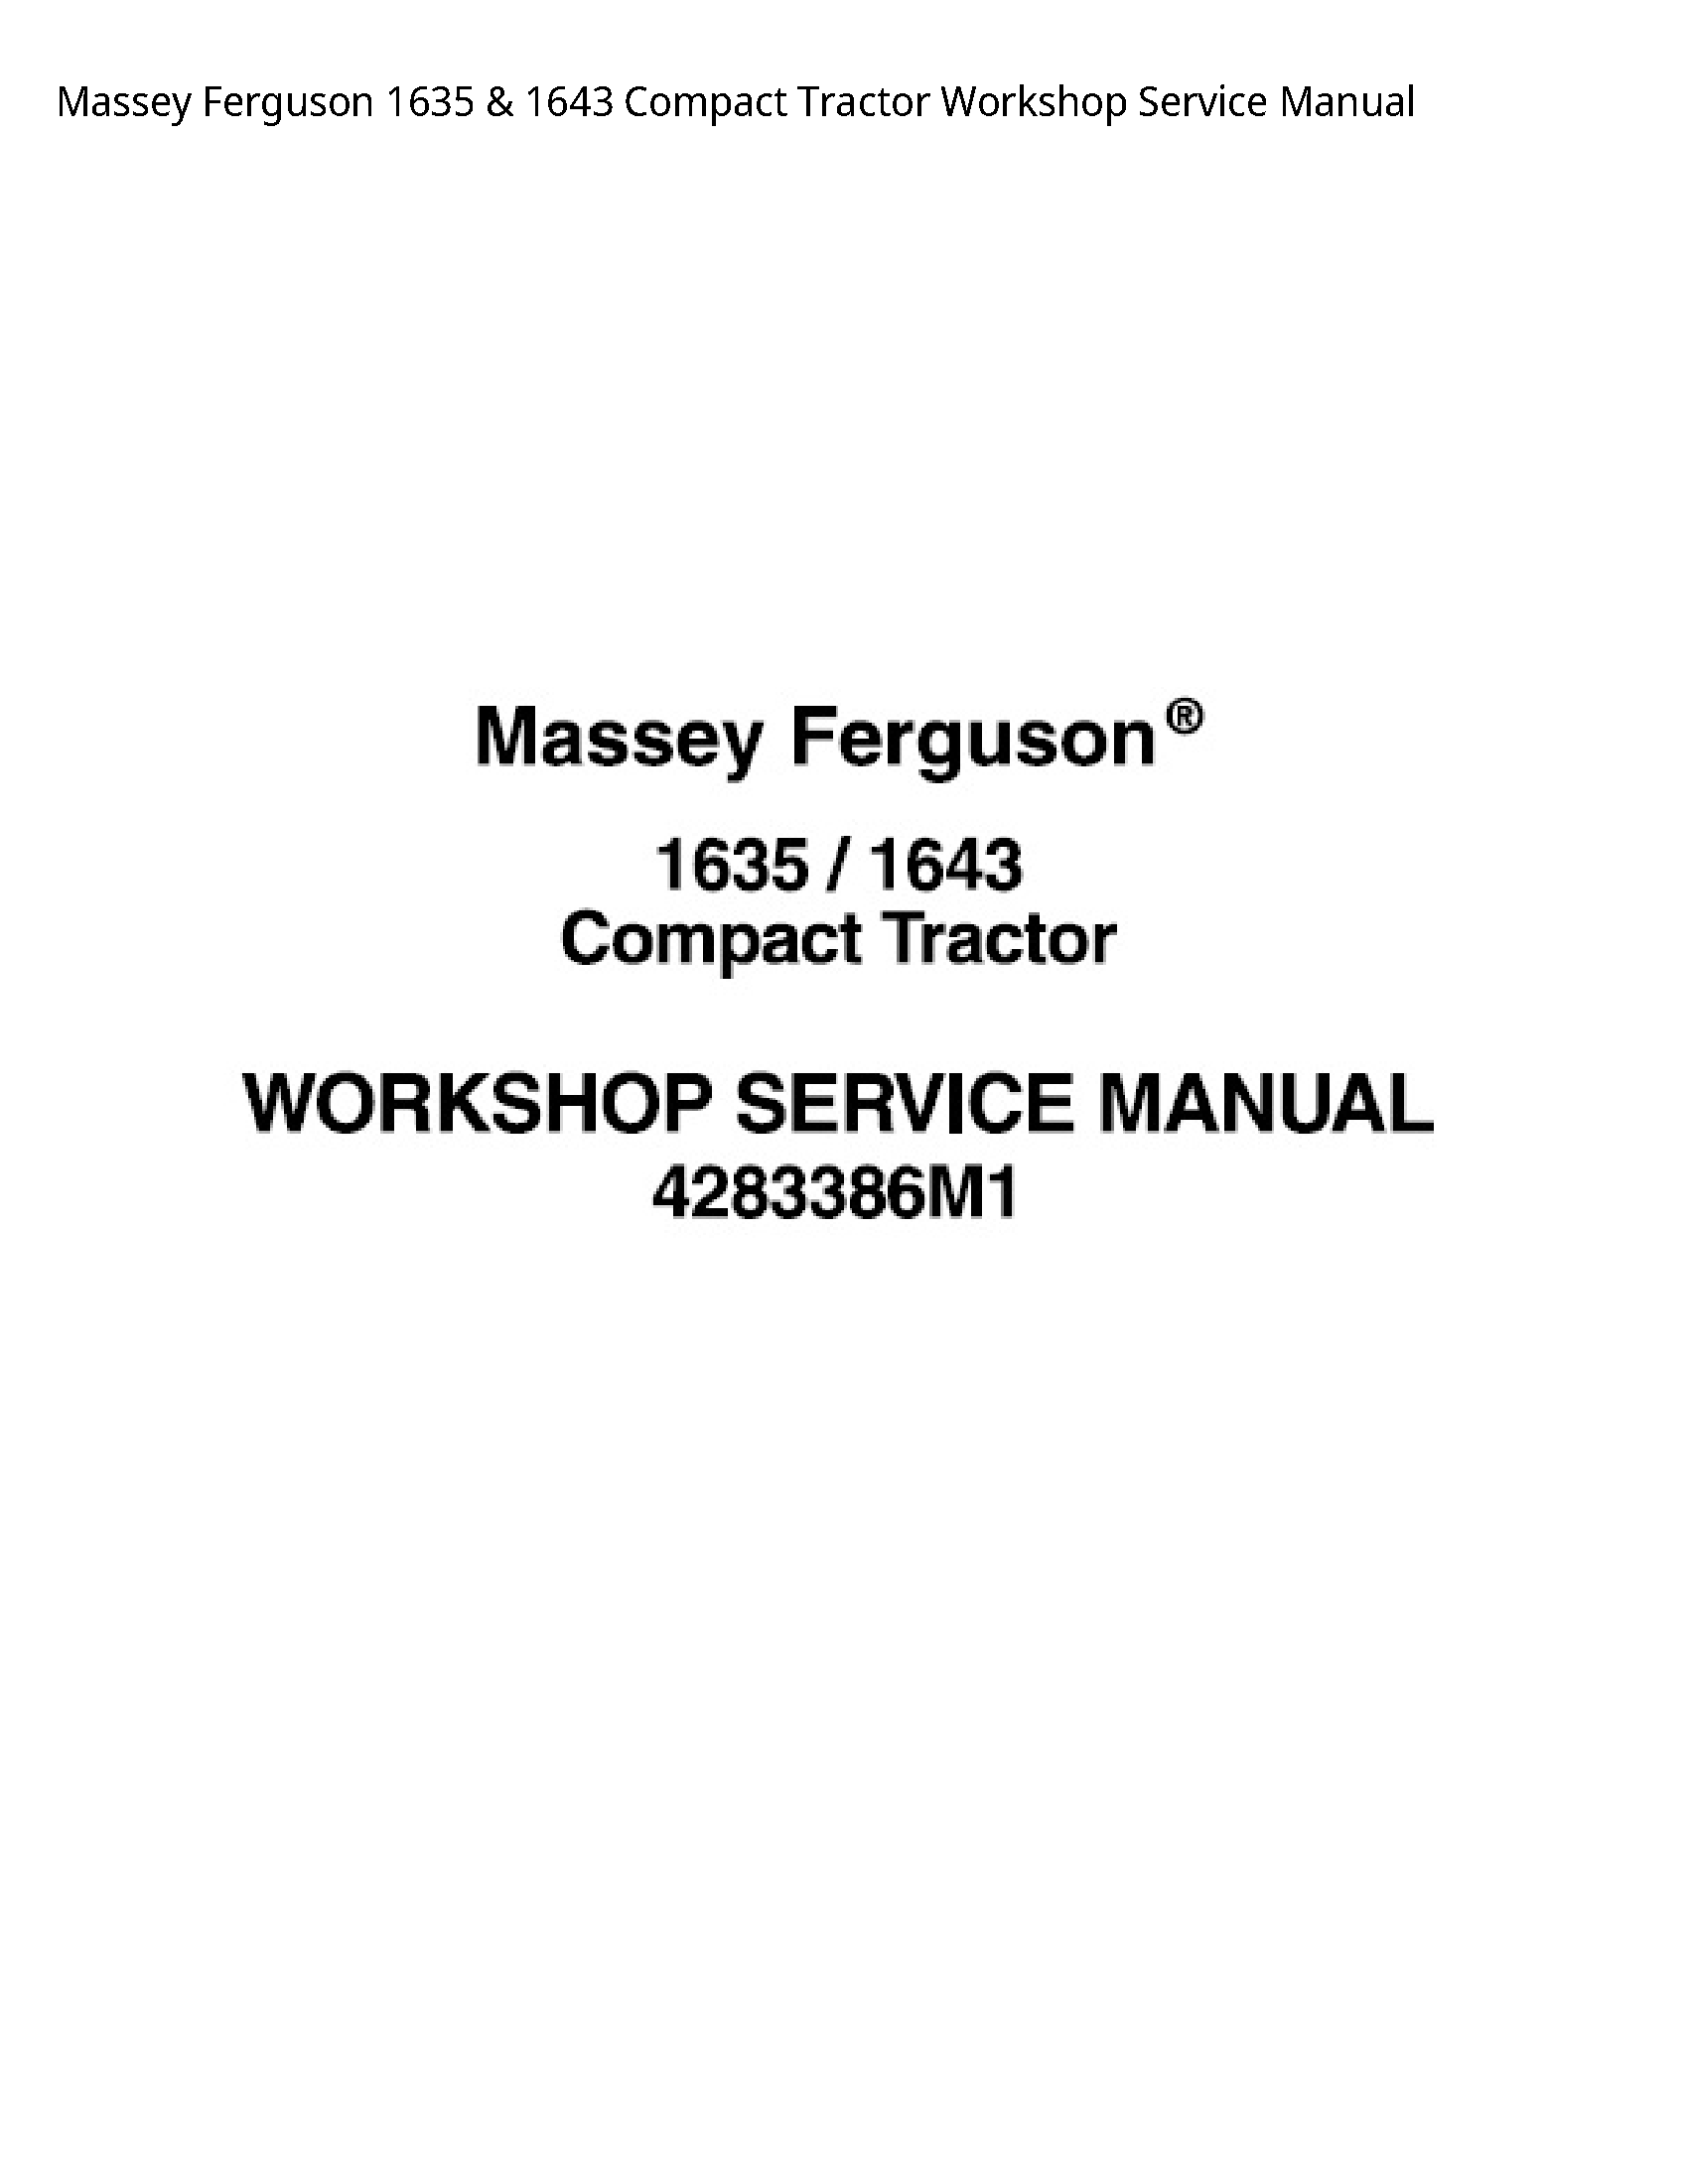 Massey Ferguson 1635 Compact Tractor Service manual